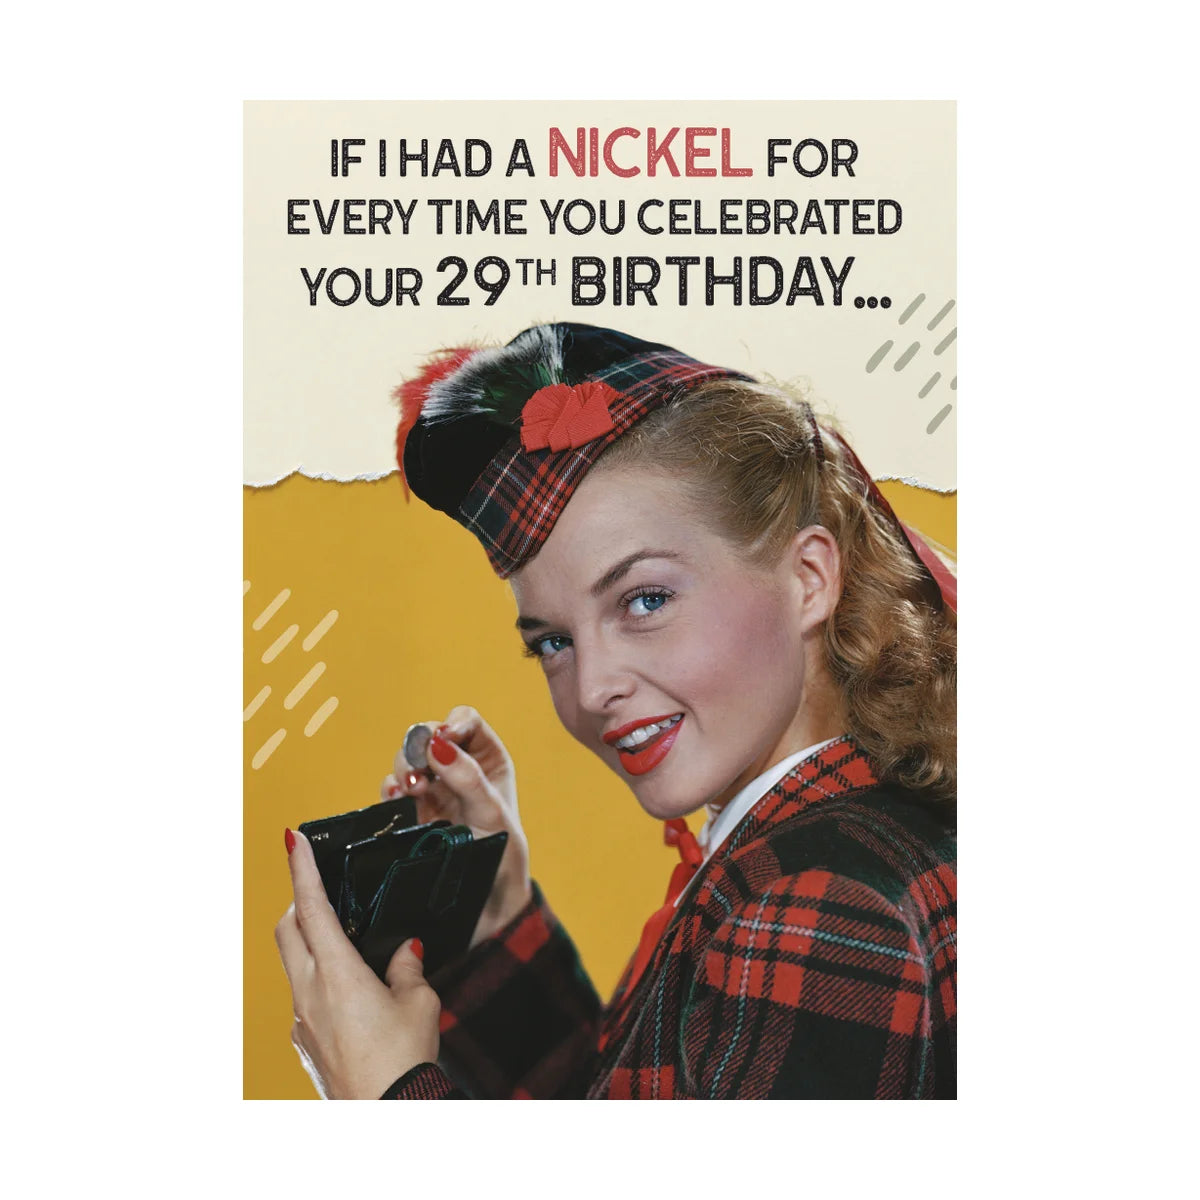 Nickel for a Birthday - Birthday Card